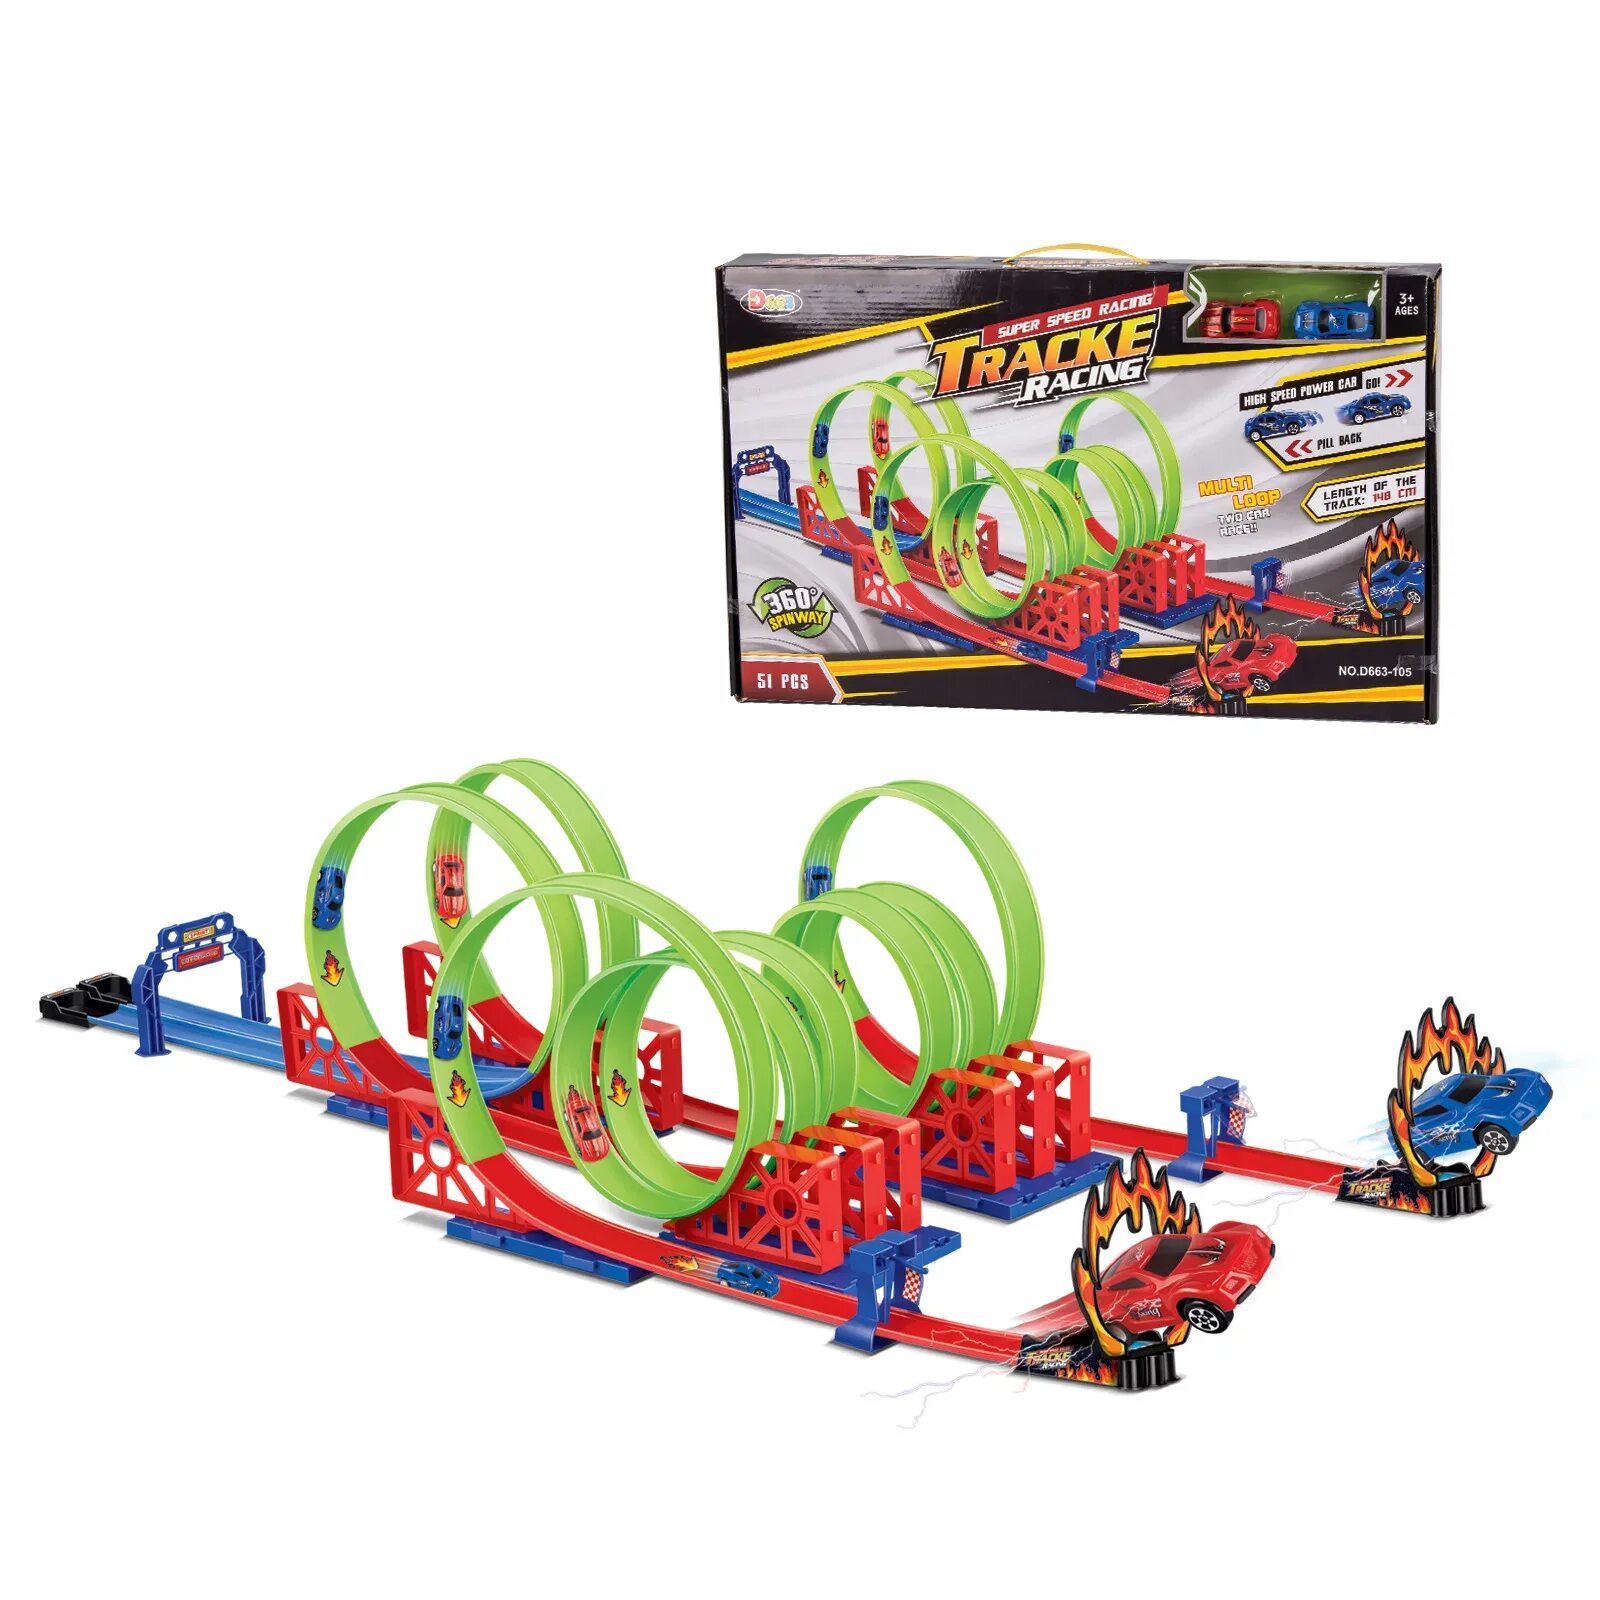 Track Racing игрушка. Супер трек игрушка. 2157 Трек игрушечный. Speed Racing игрушка для детей.